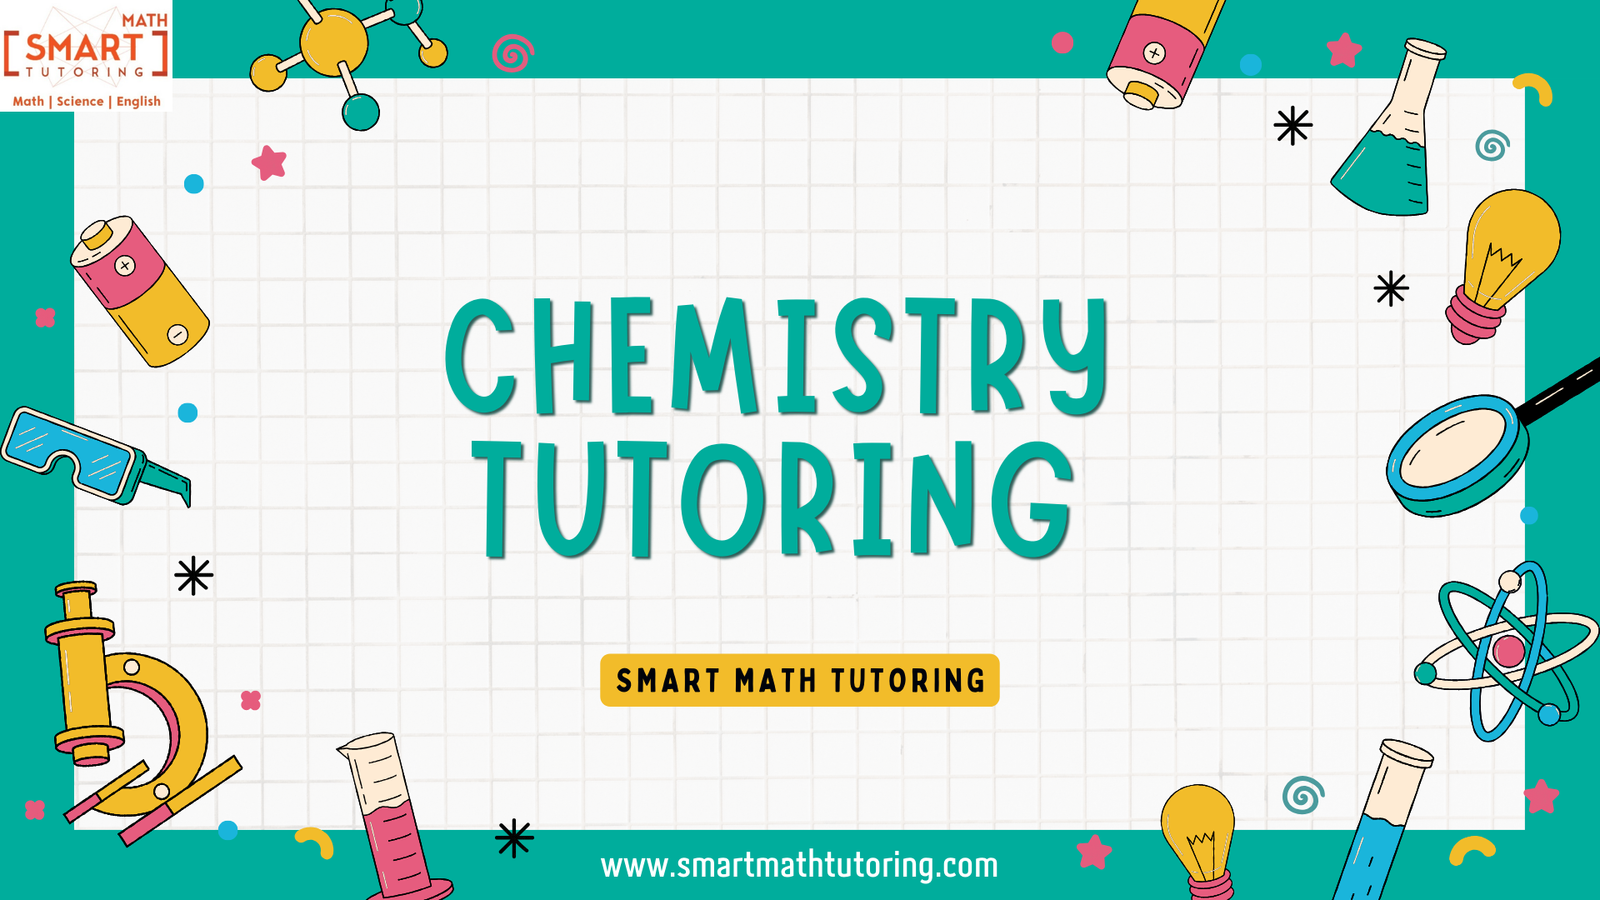 Smart Math Tutoring Provides Best Online Chemistry Tutoring - TIMES OF RISING